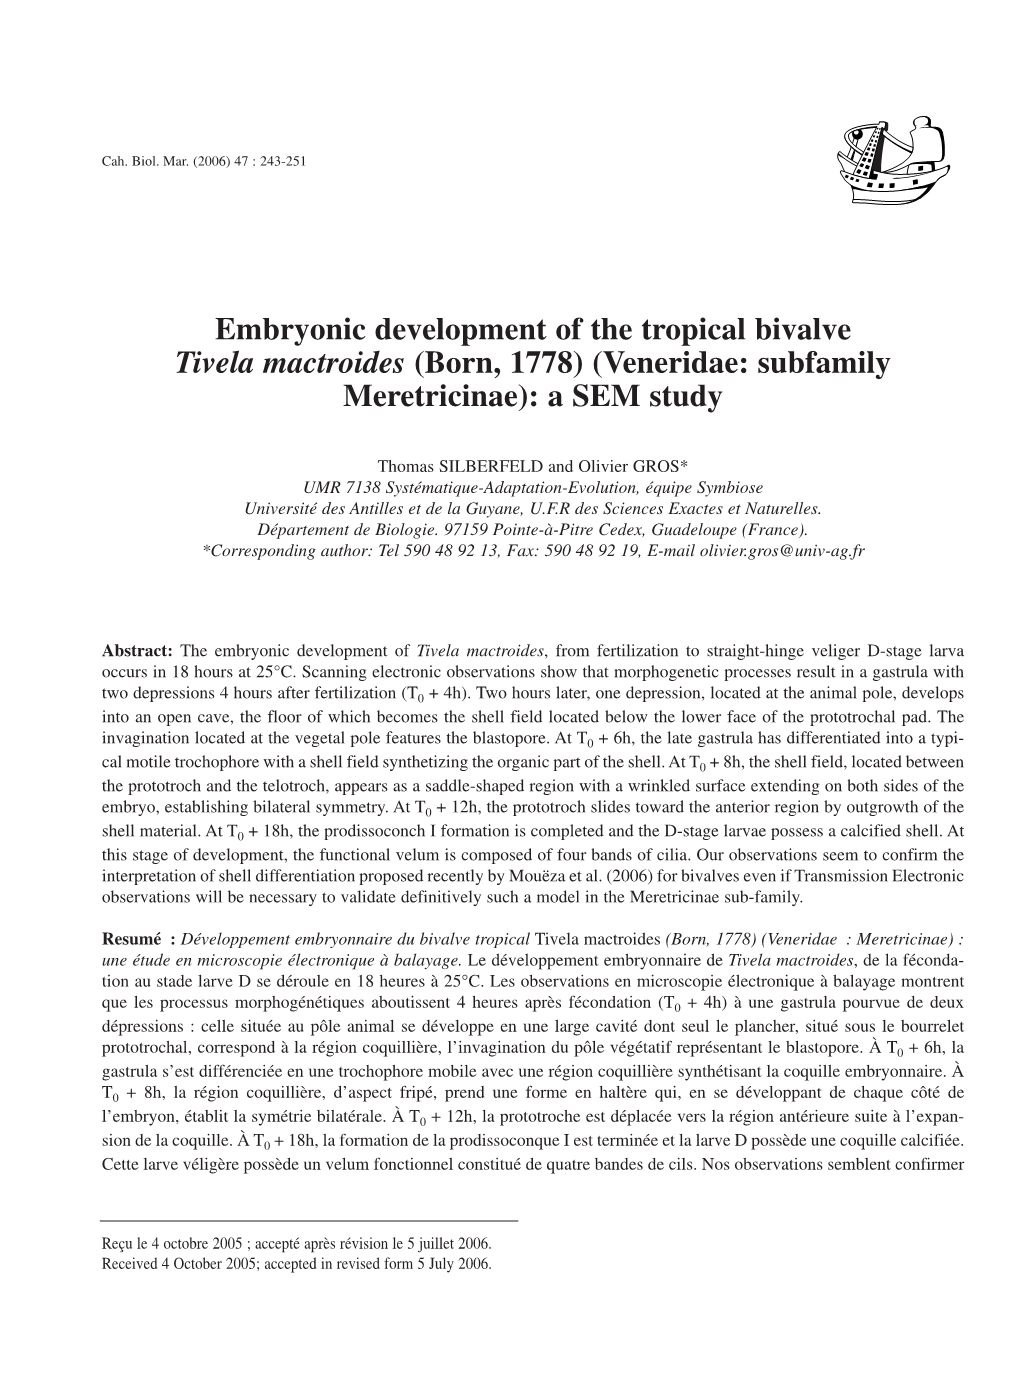 Embryonic Development of the Tropical Bivalve Tivela Mactroides (Born, 1778) (Veneridae: Subfamily Meretricinae): a SEM Study